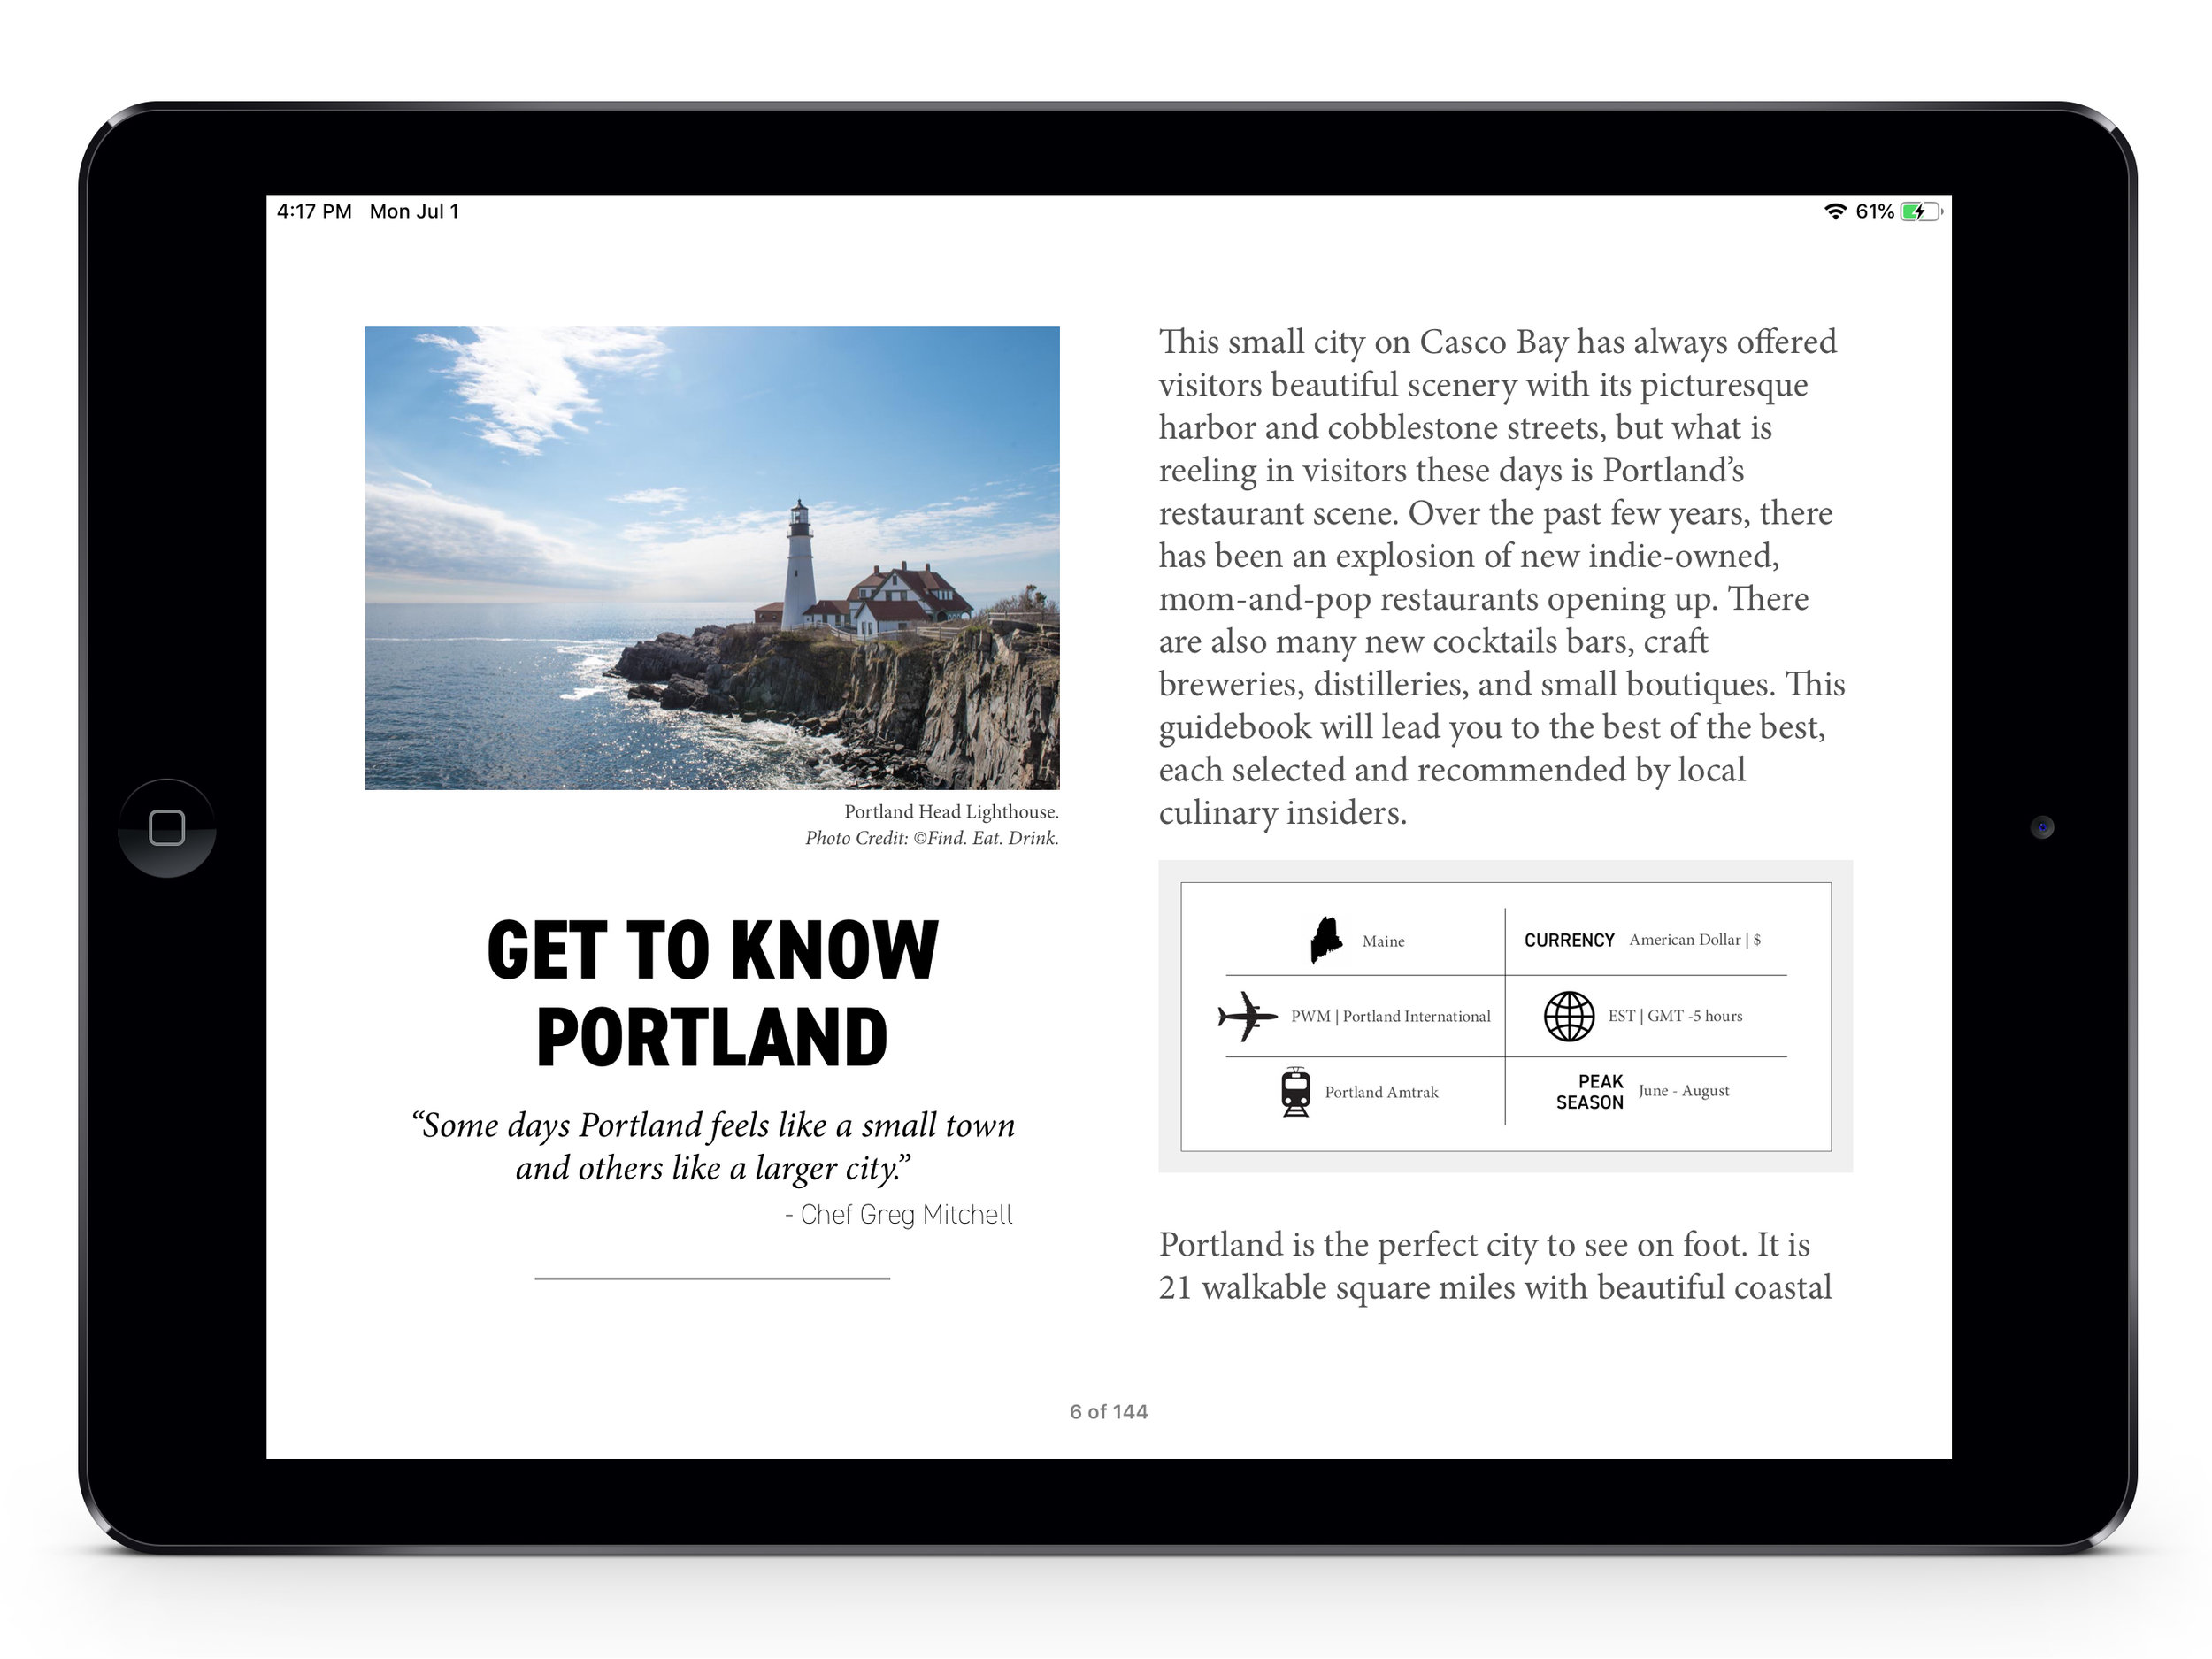 iPadAir_PortlandME_Screenshots_Landscape_1.3.jpg